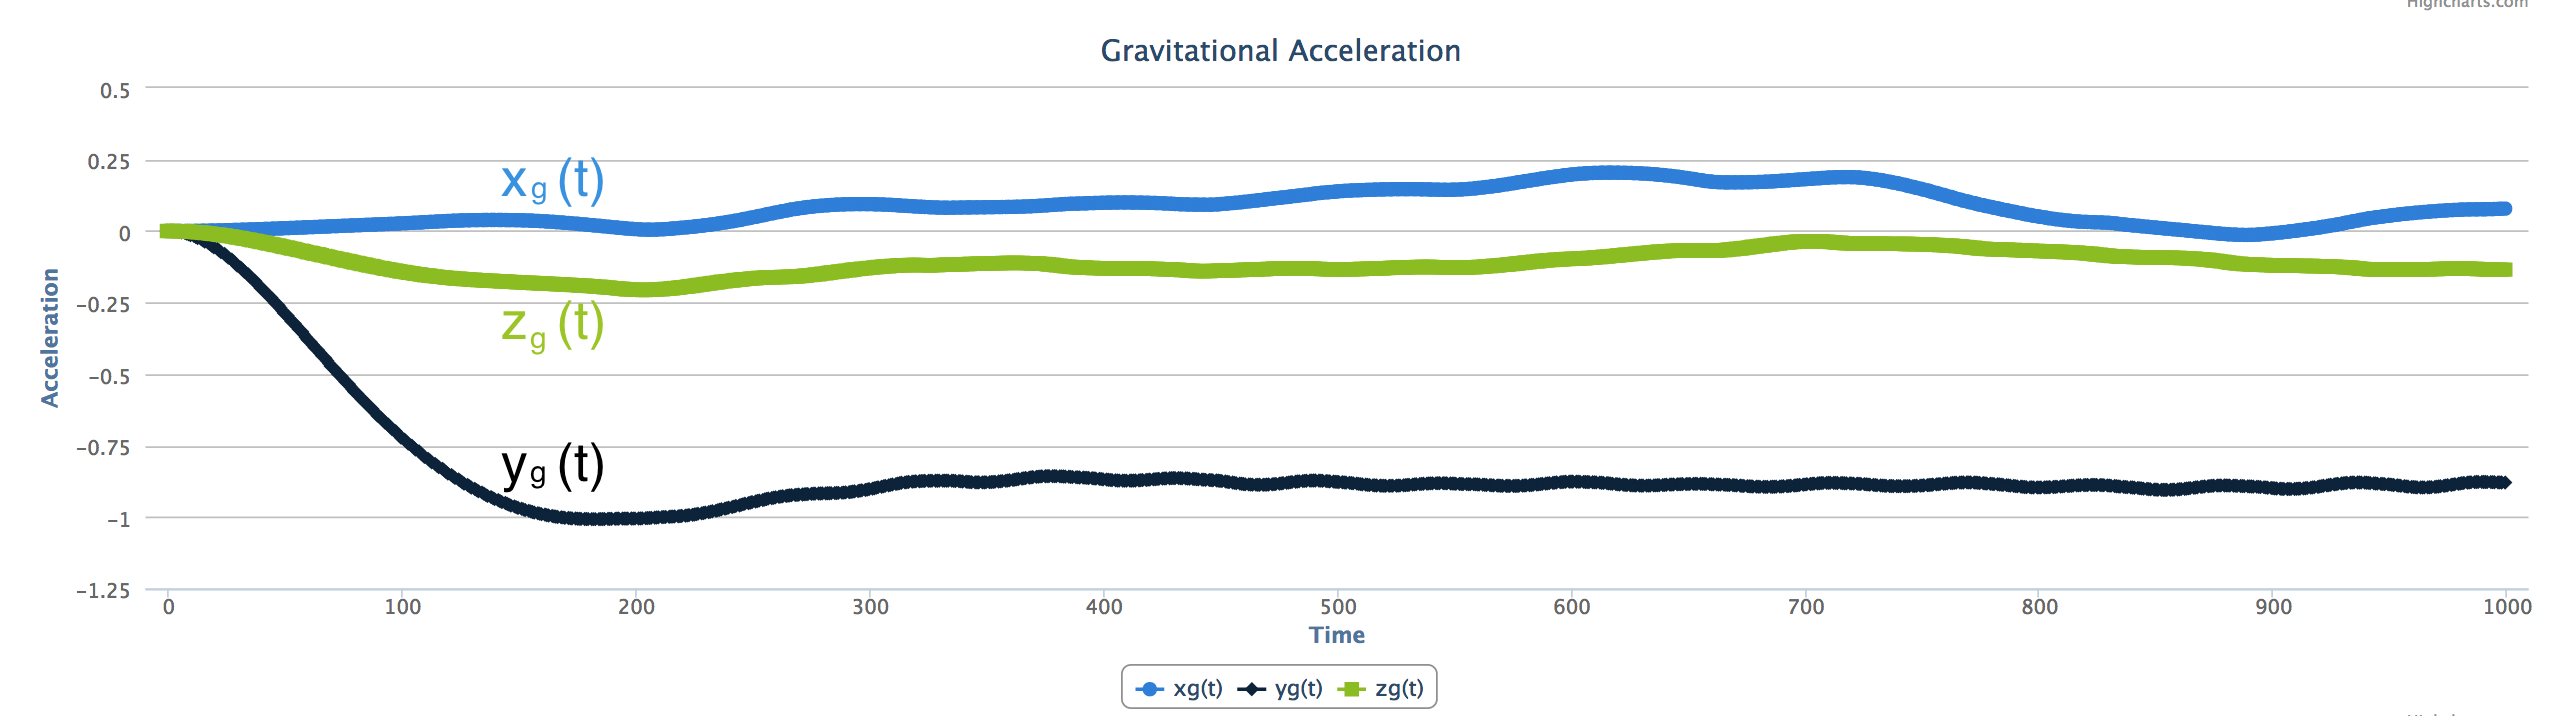 Figure 16.8 - Gravitational acceleration